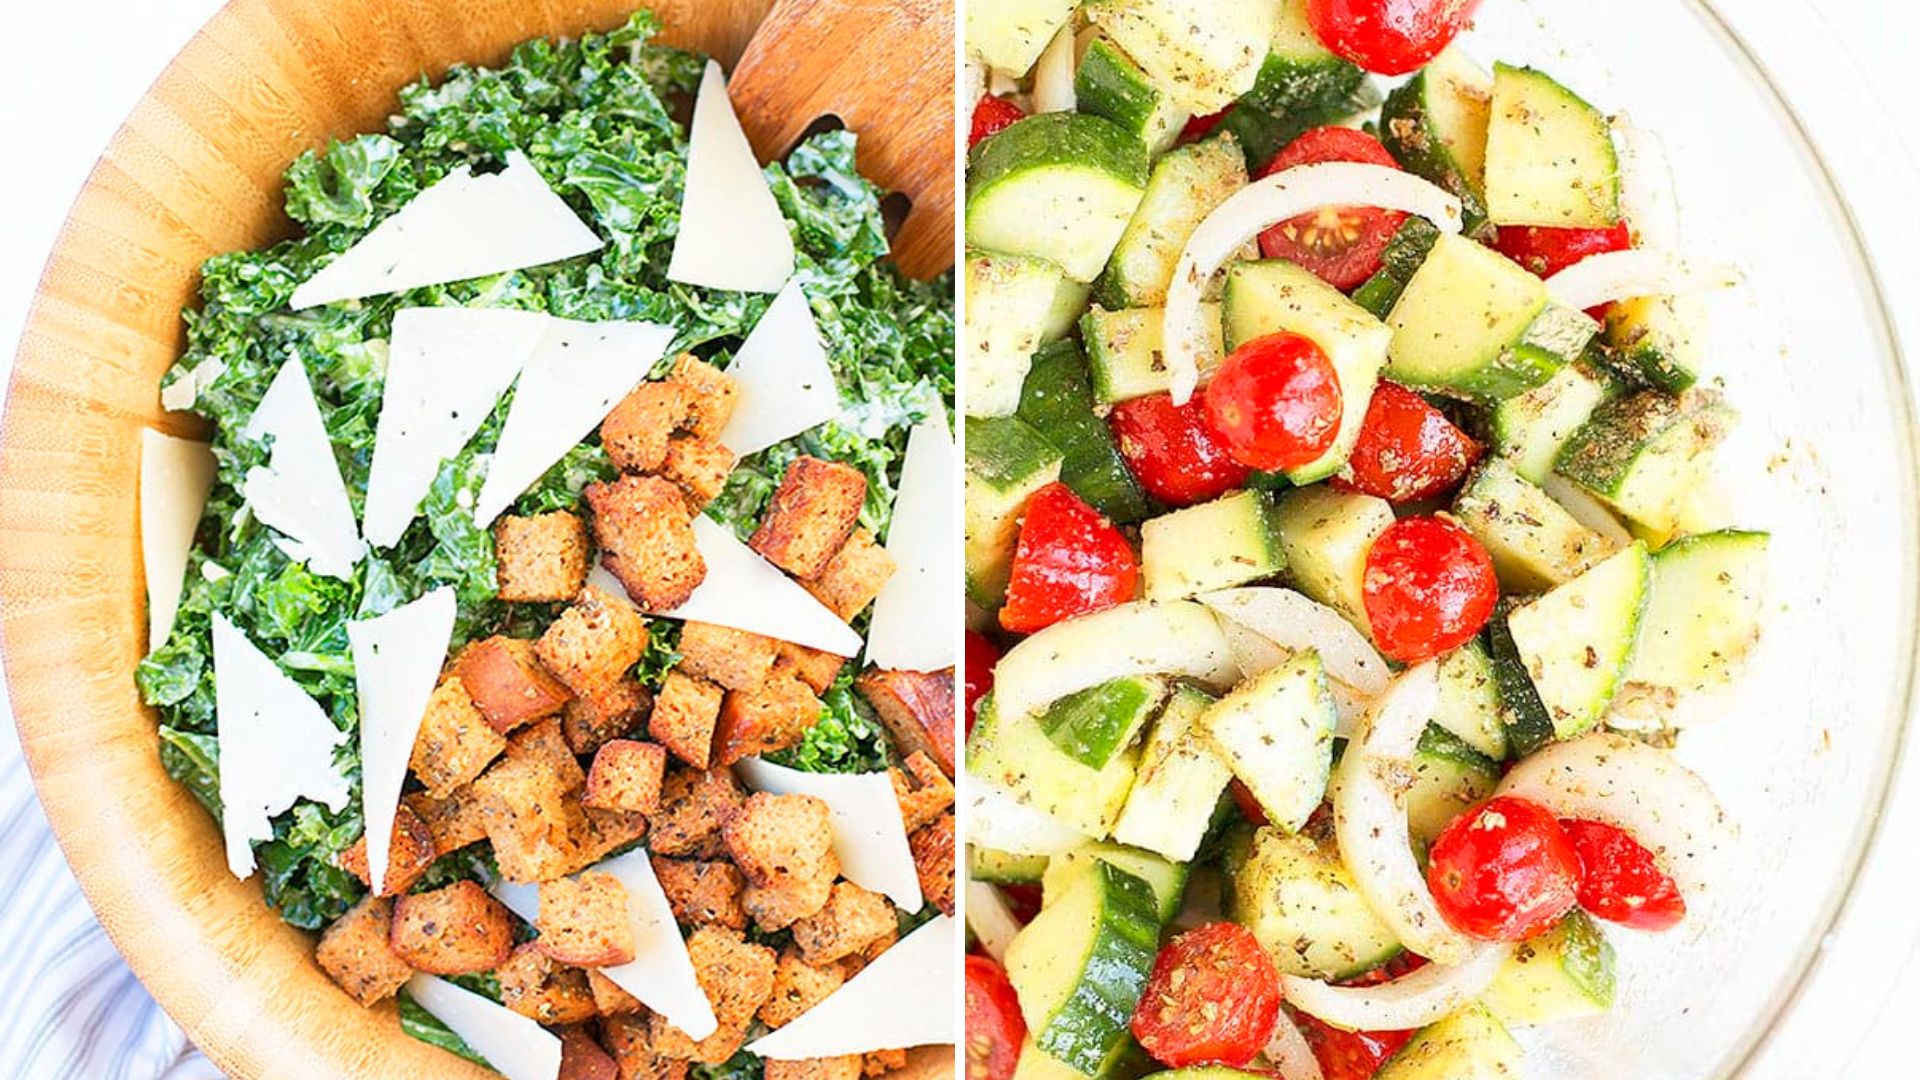 Two no cook meals images side by side: Kale Caesar salad and vegetable Greek salad.